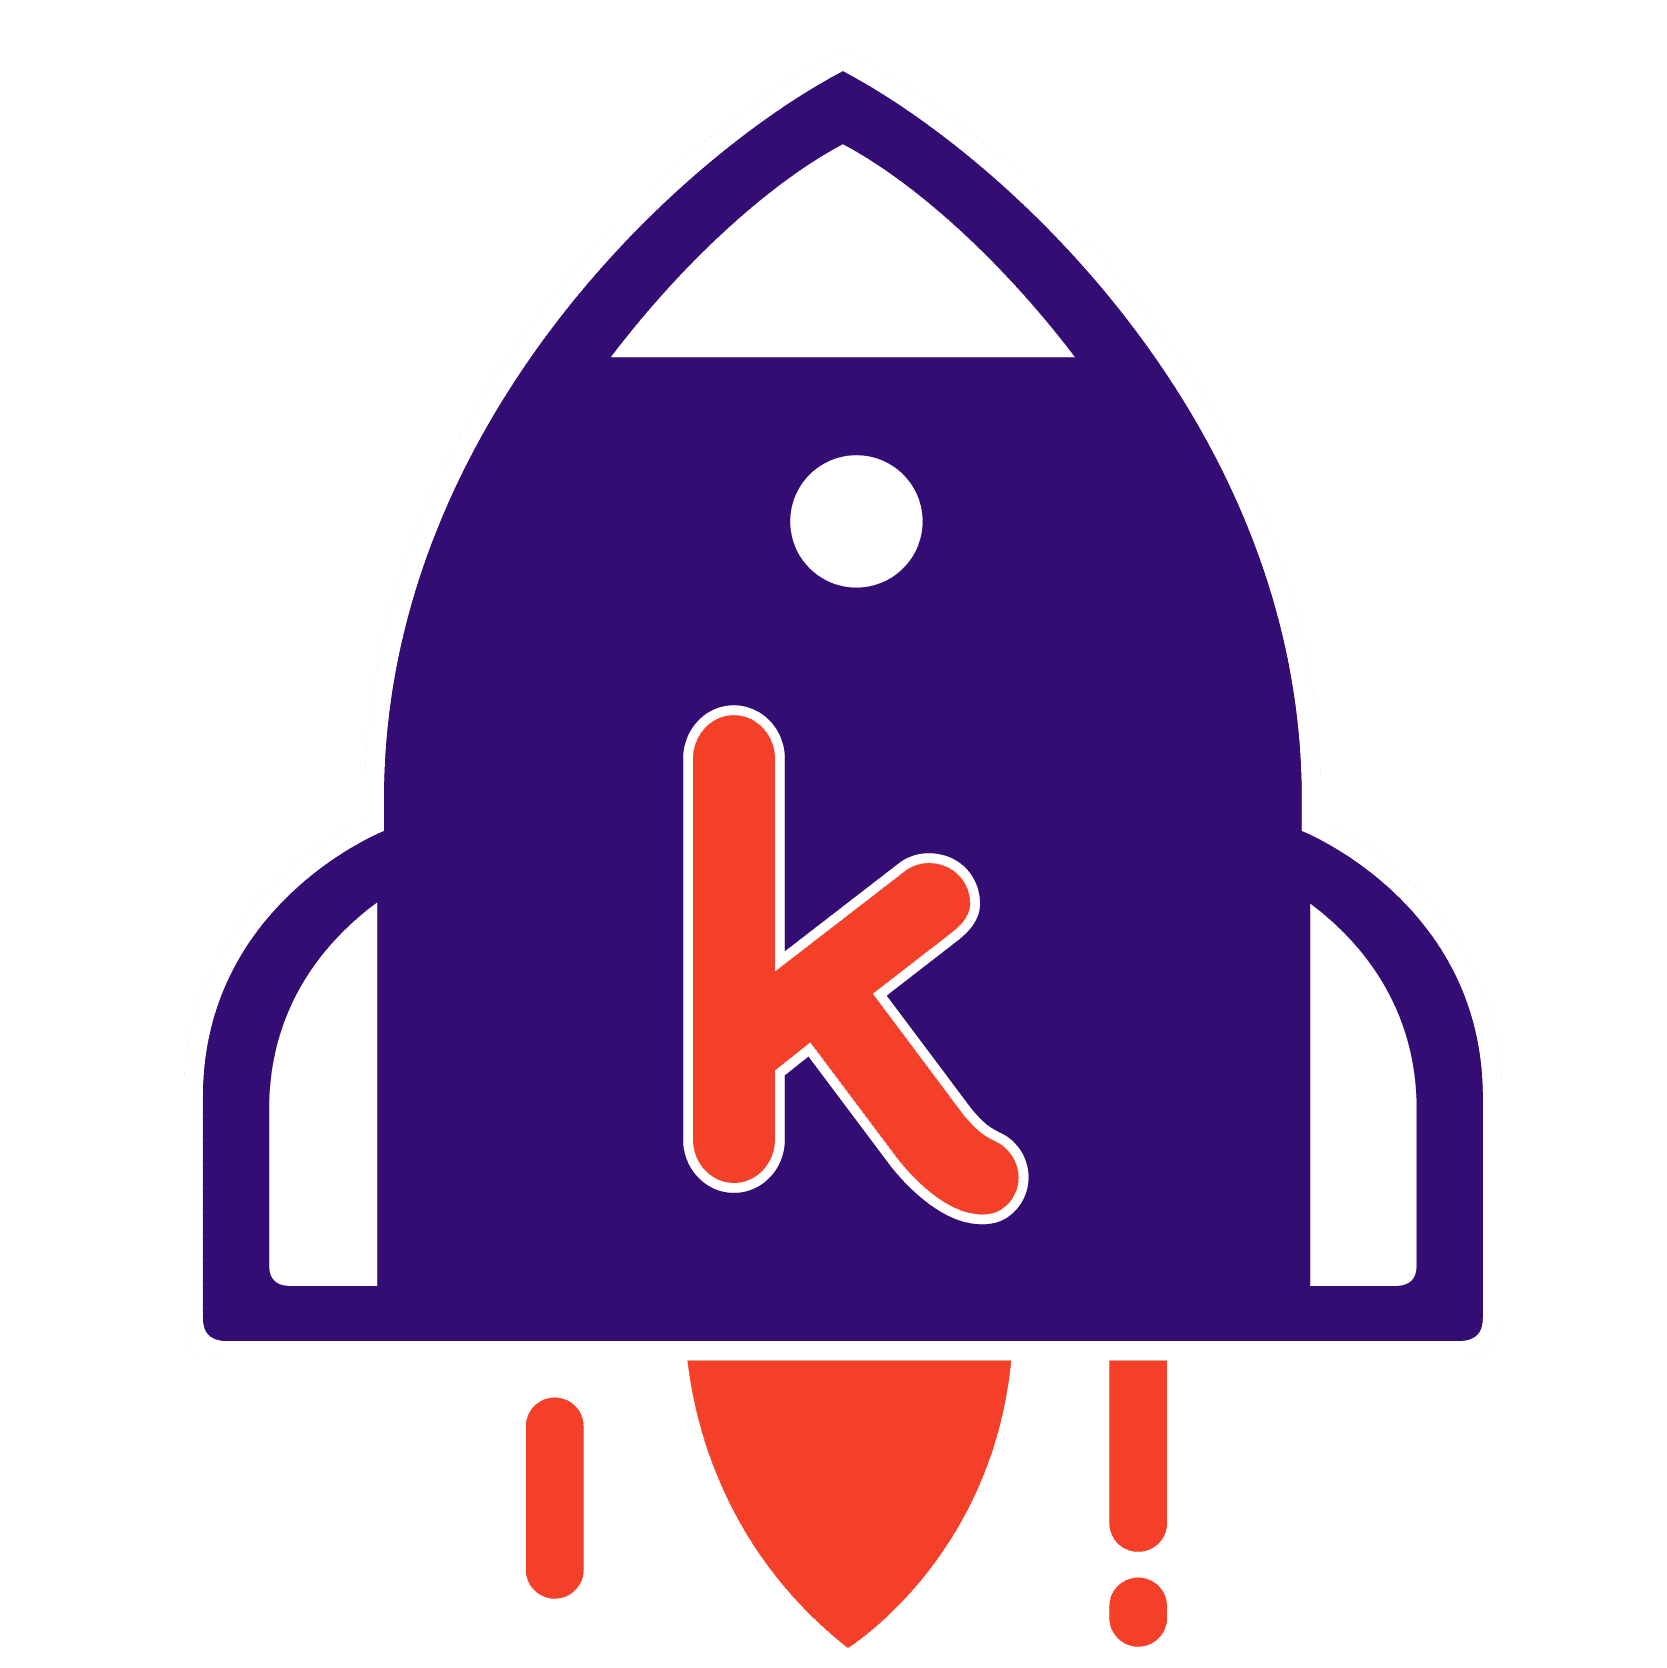 Rocket with Kangalou logo